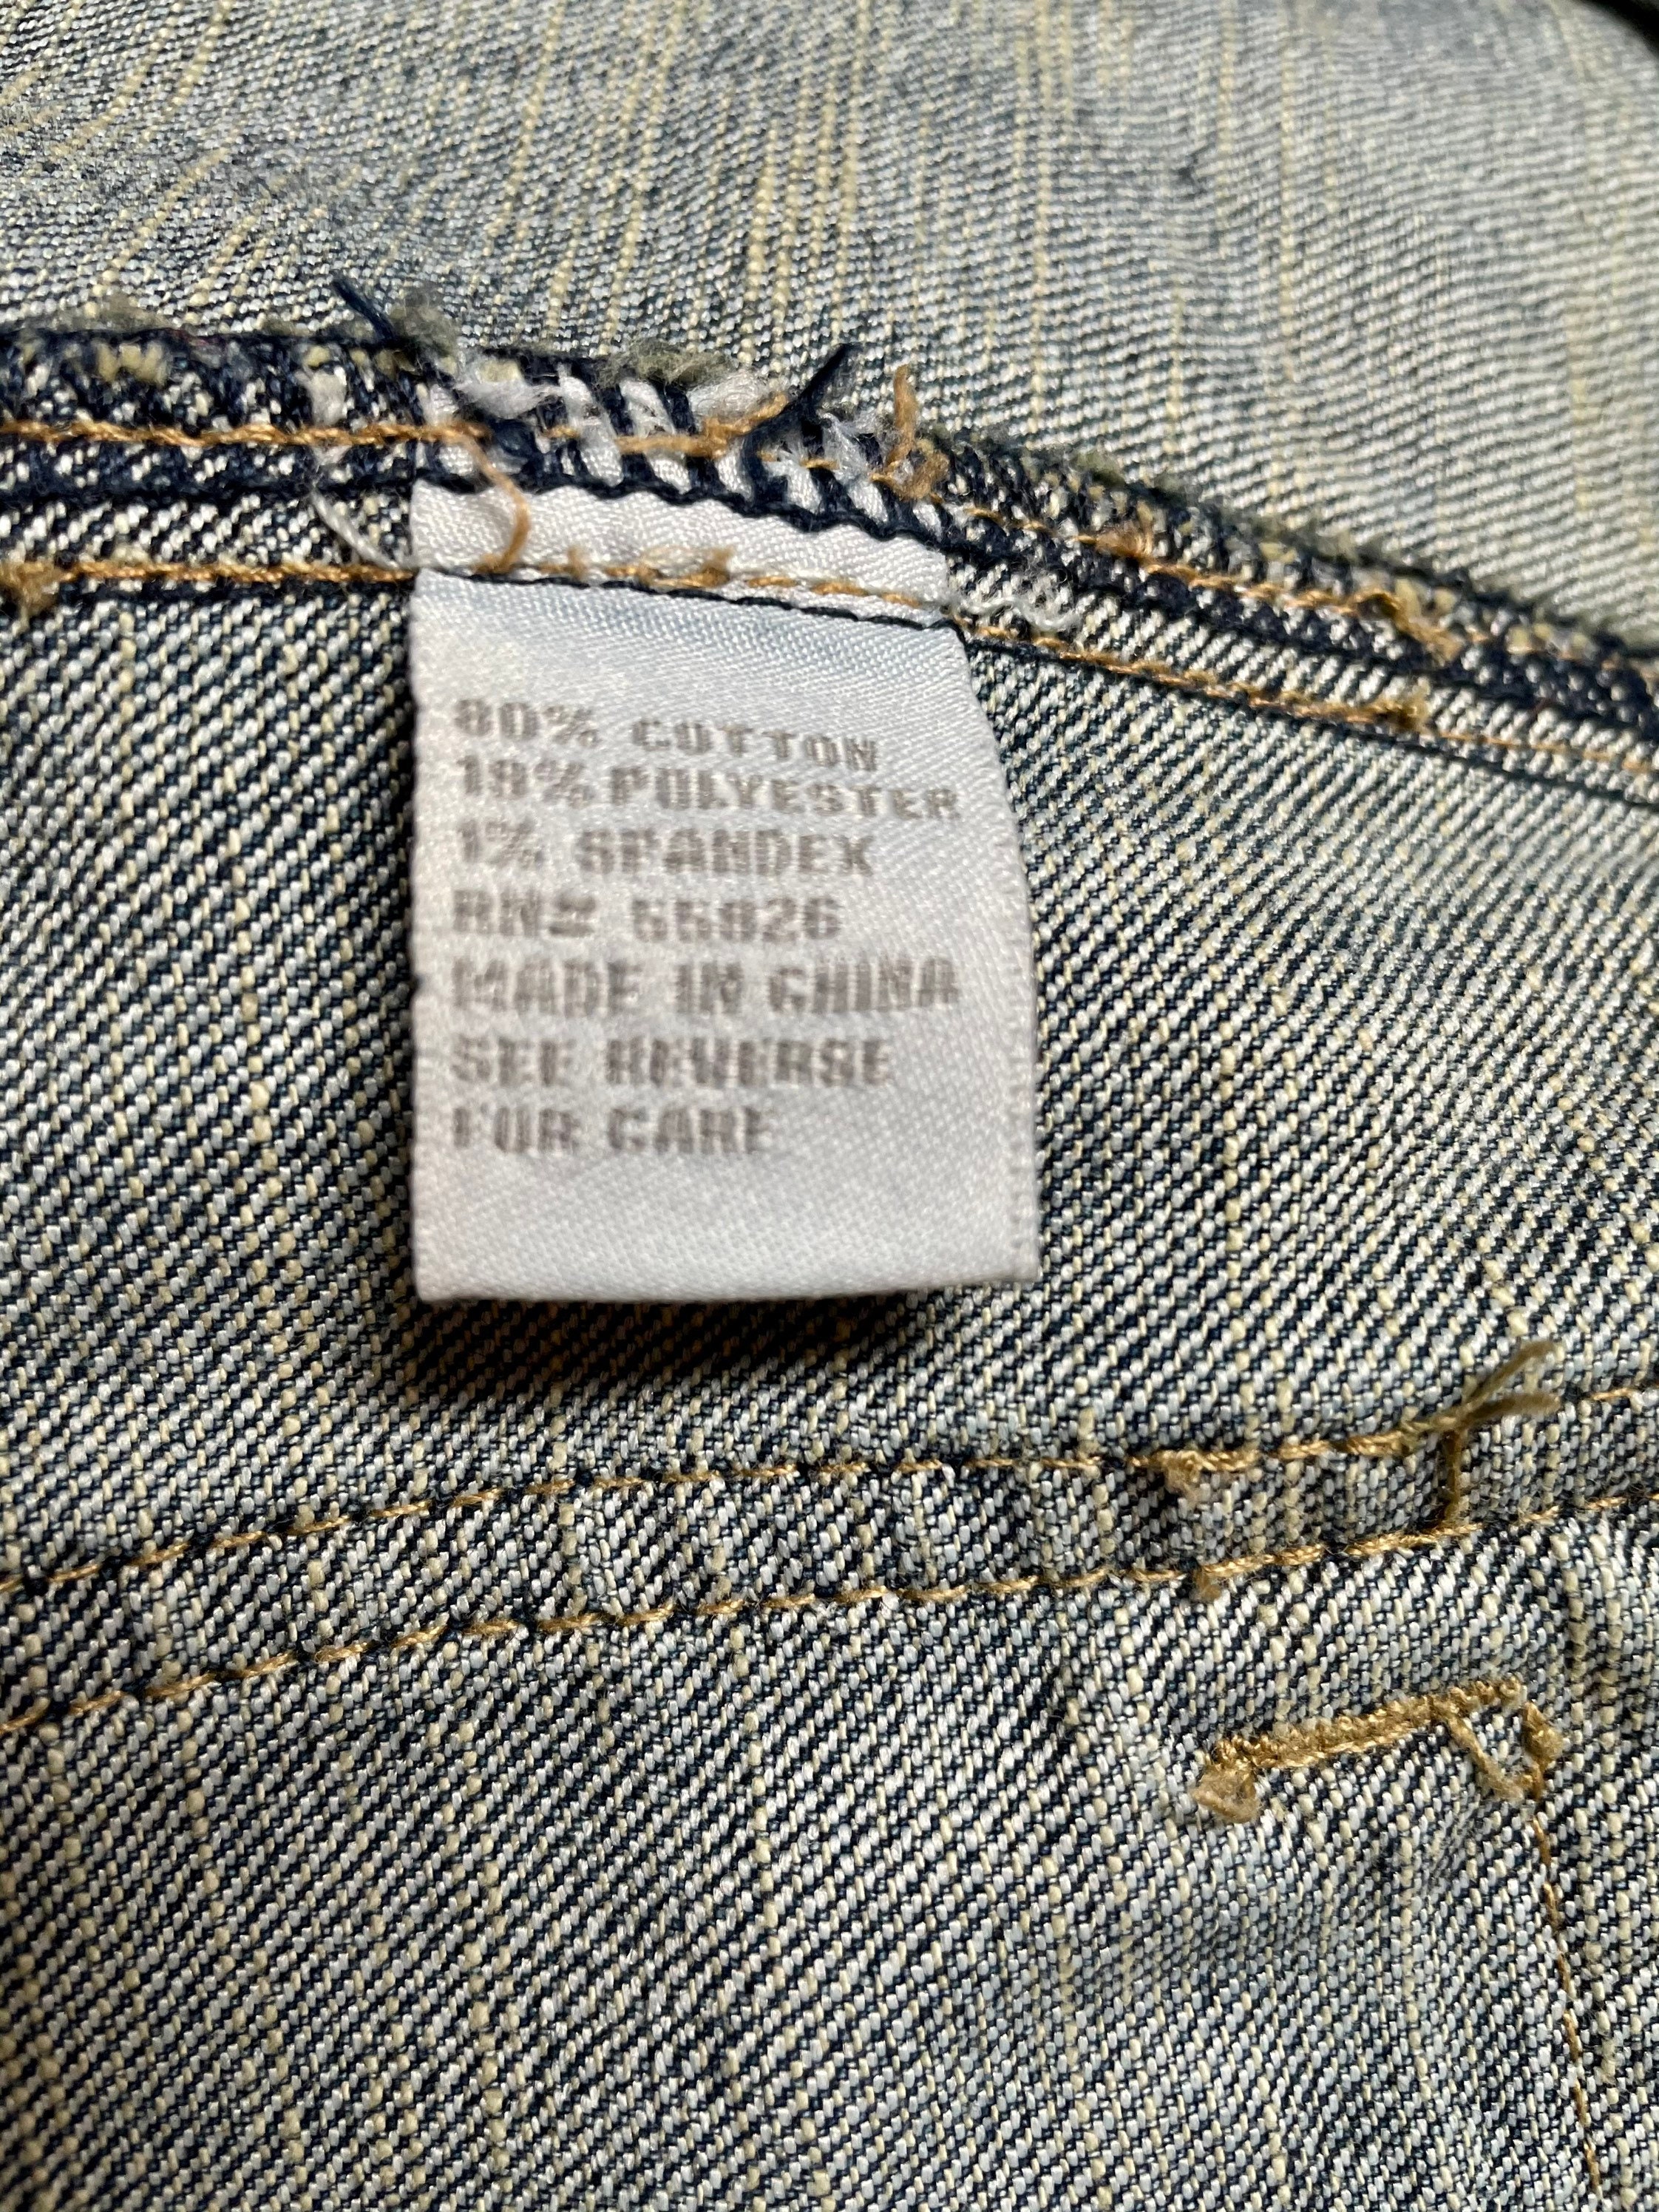 Embellished Vintage Jeans Jacket Upcycled Denim Jacket With - Etsy